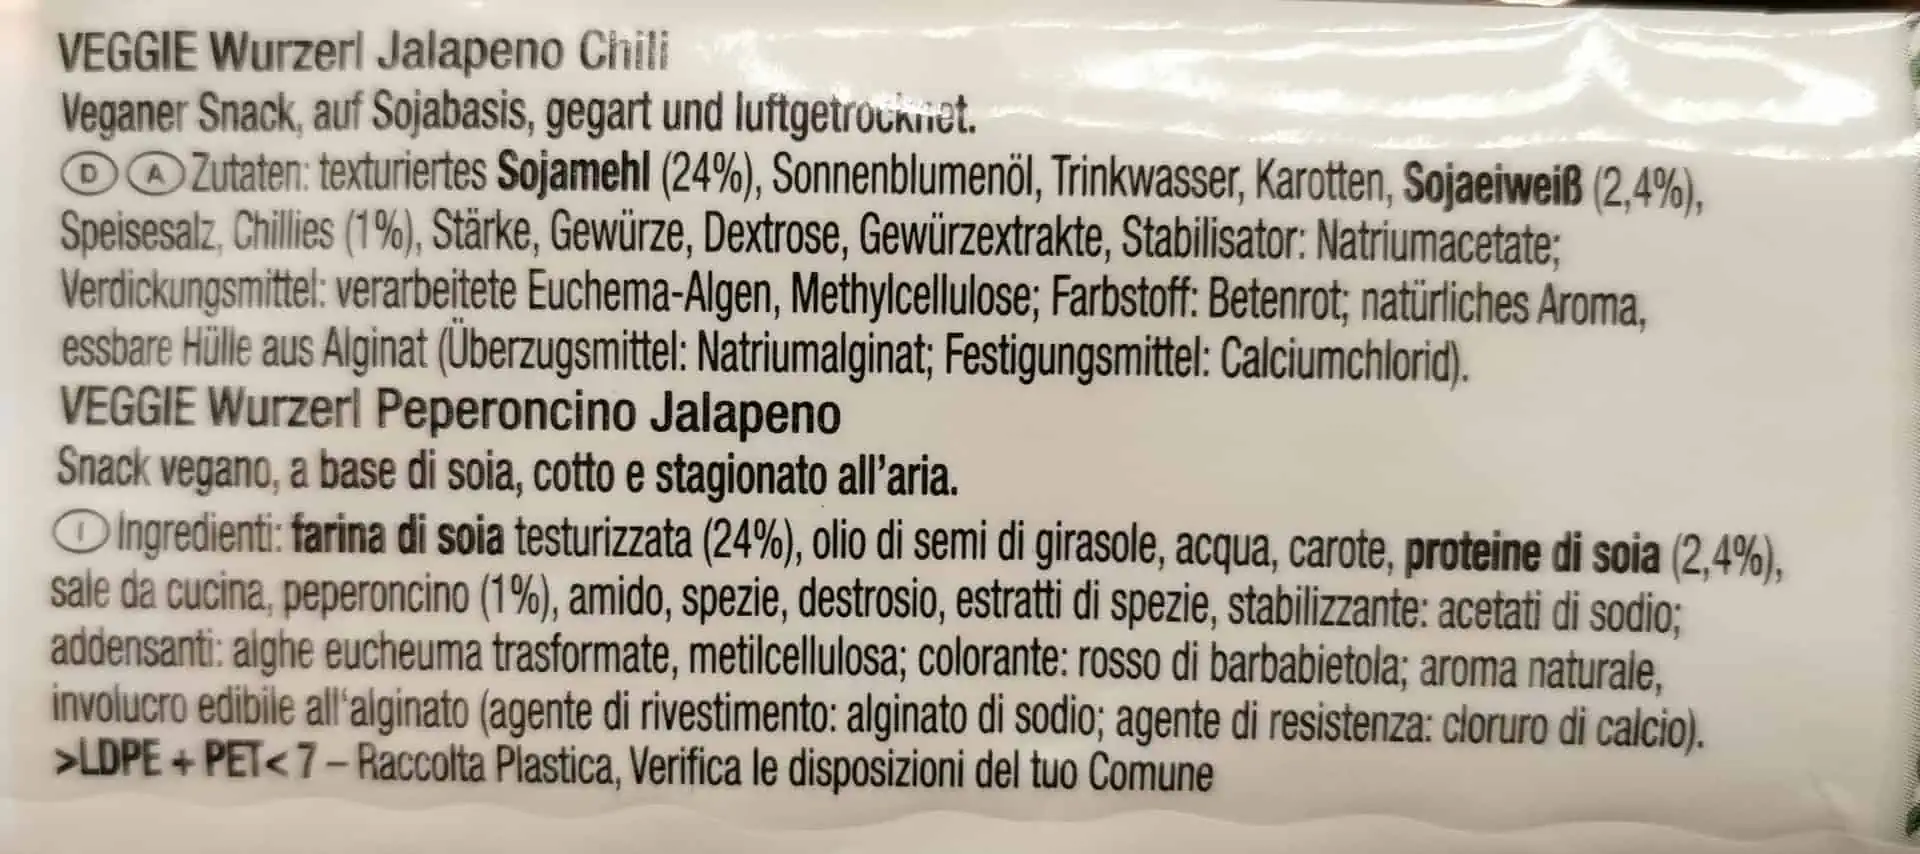 Handl Tyrol - Veggie Wurzerl Jalapeno Chili  Inhaltsstoffe & Nährwerte